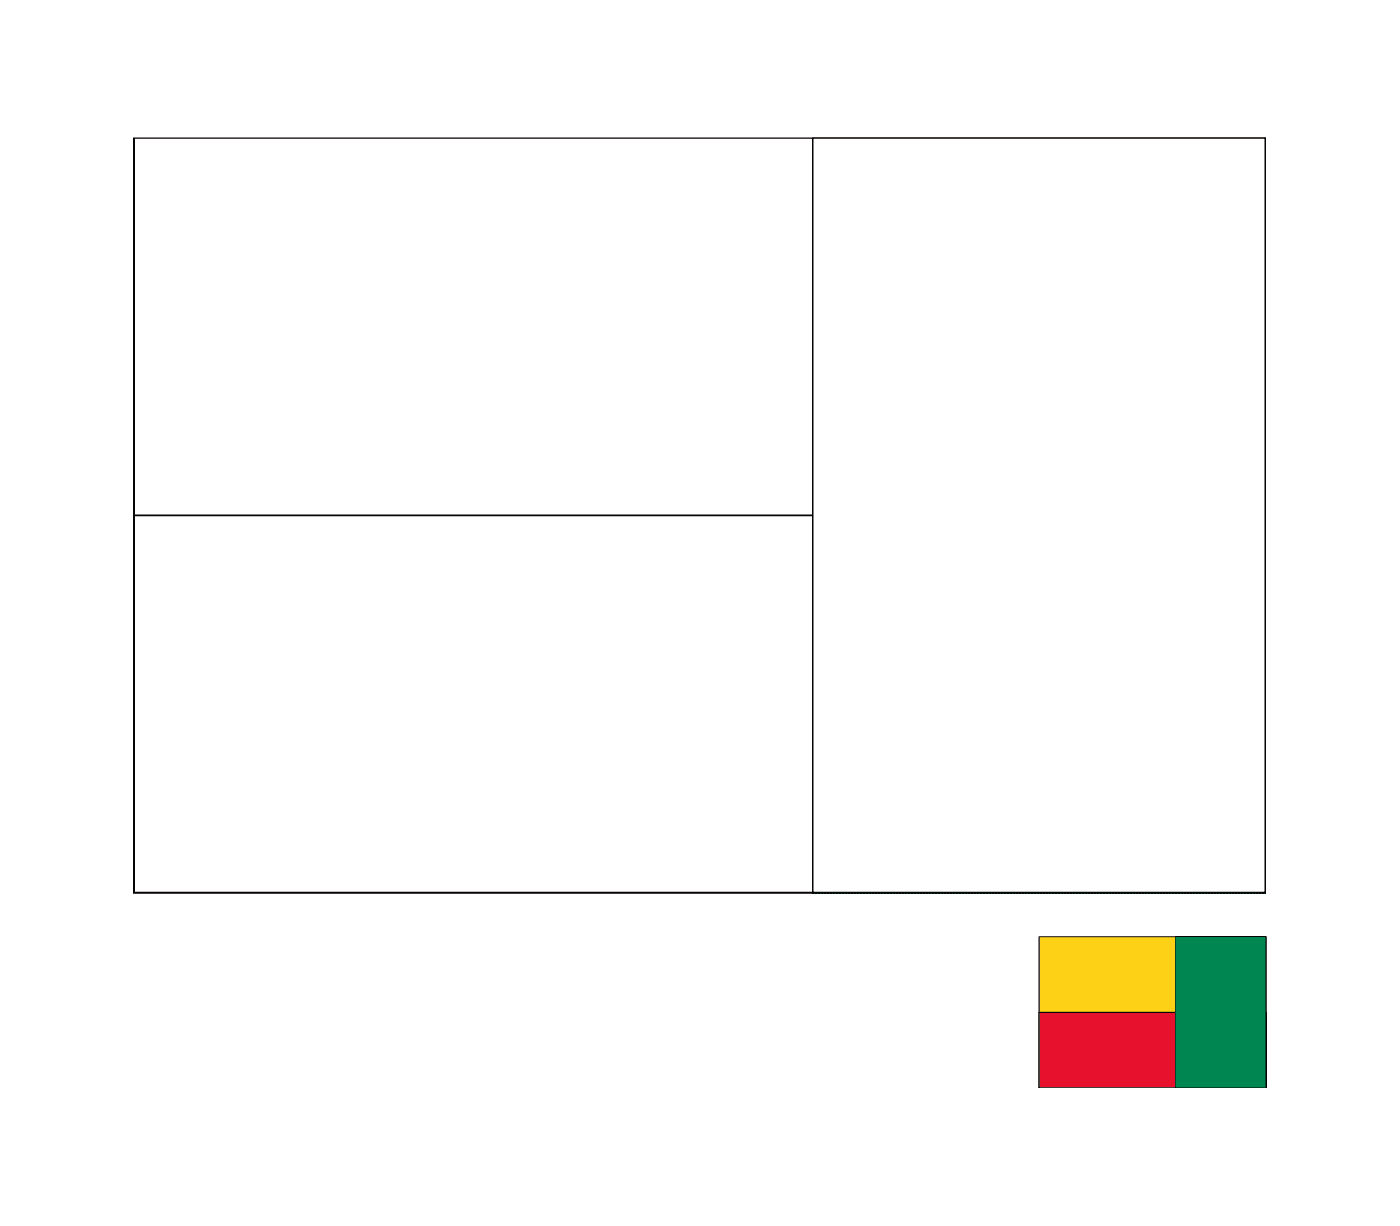  A flag of Benin 